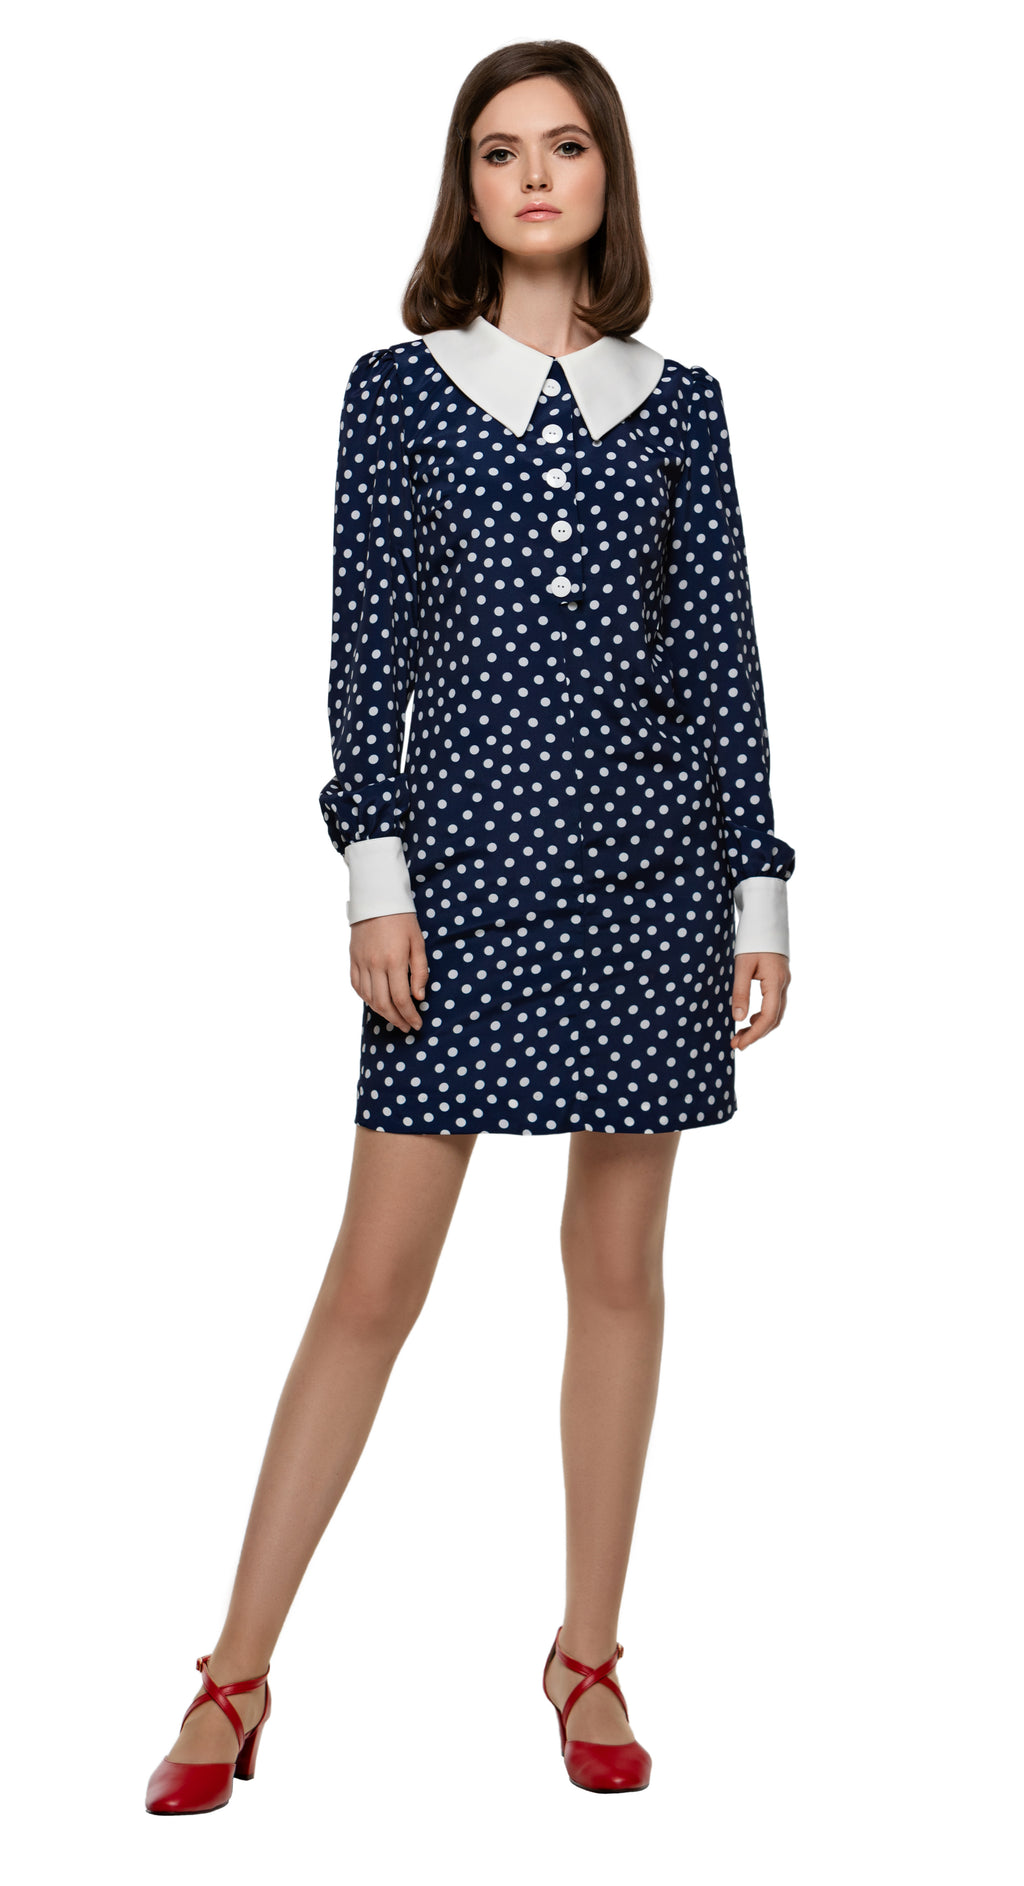 blue polka dot dress with white collar